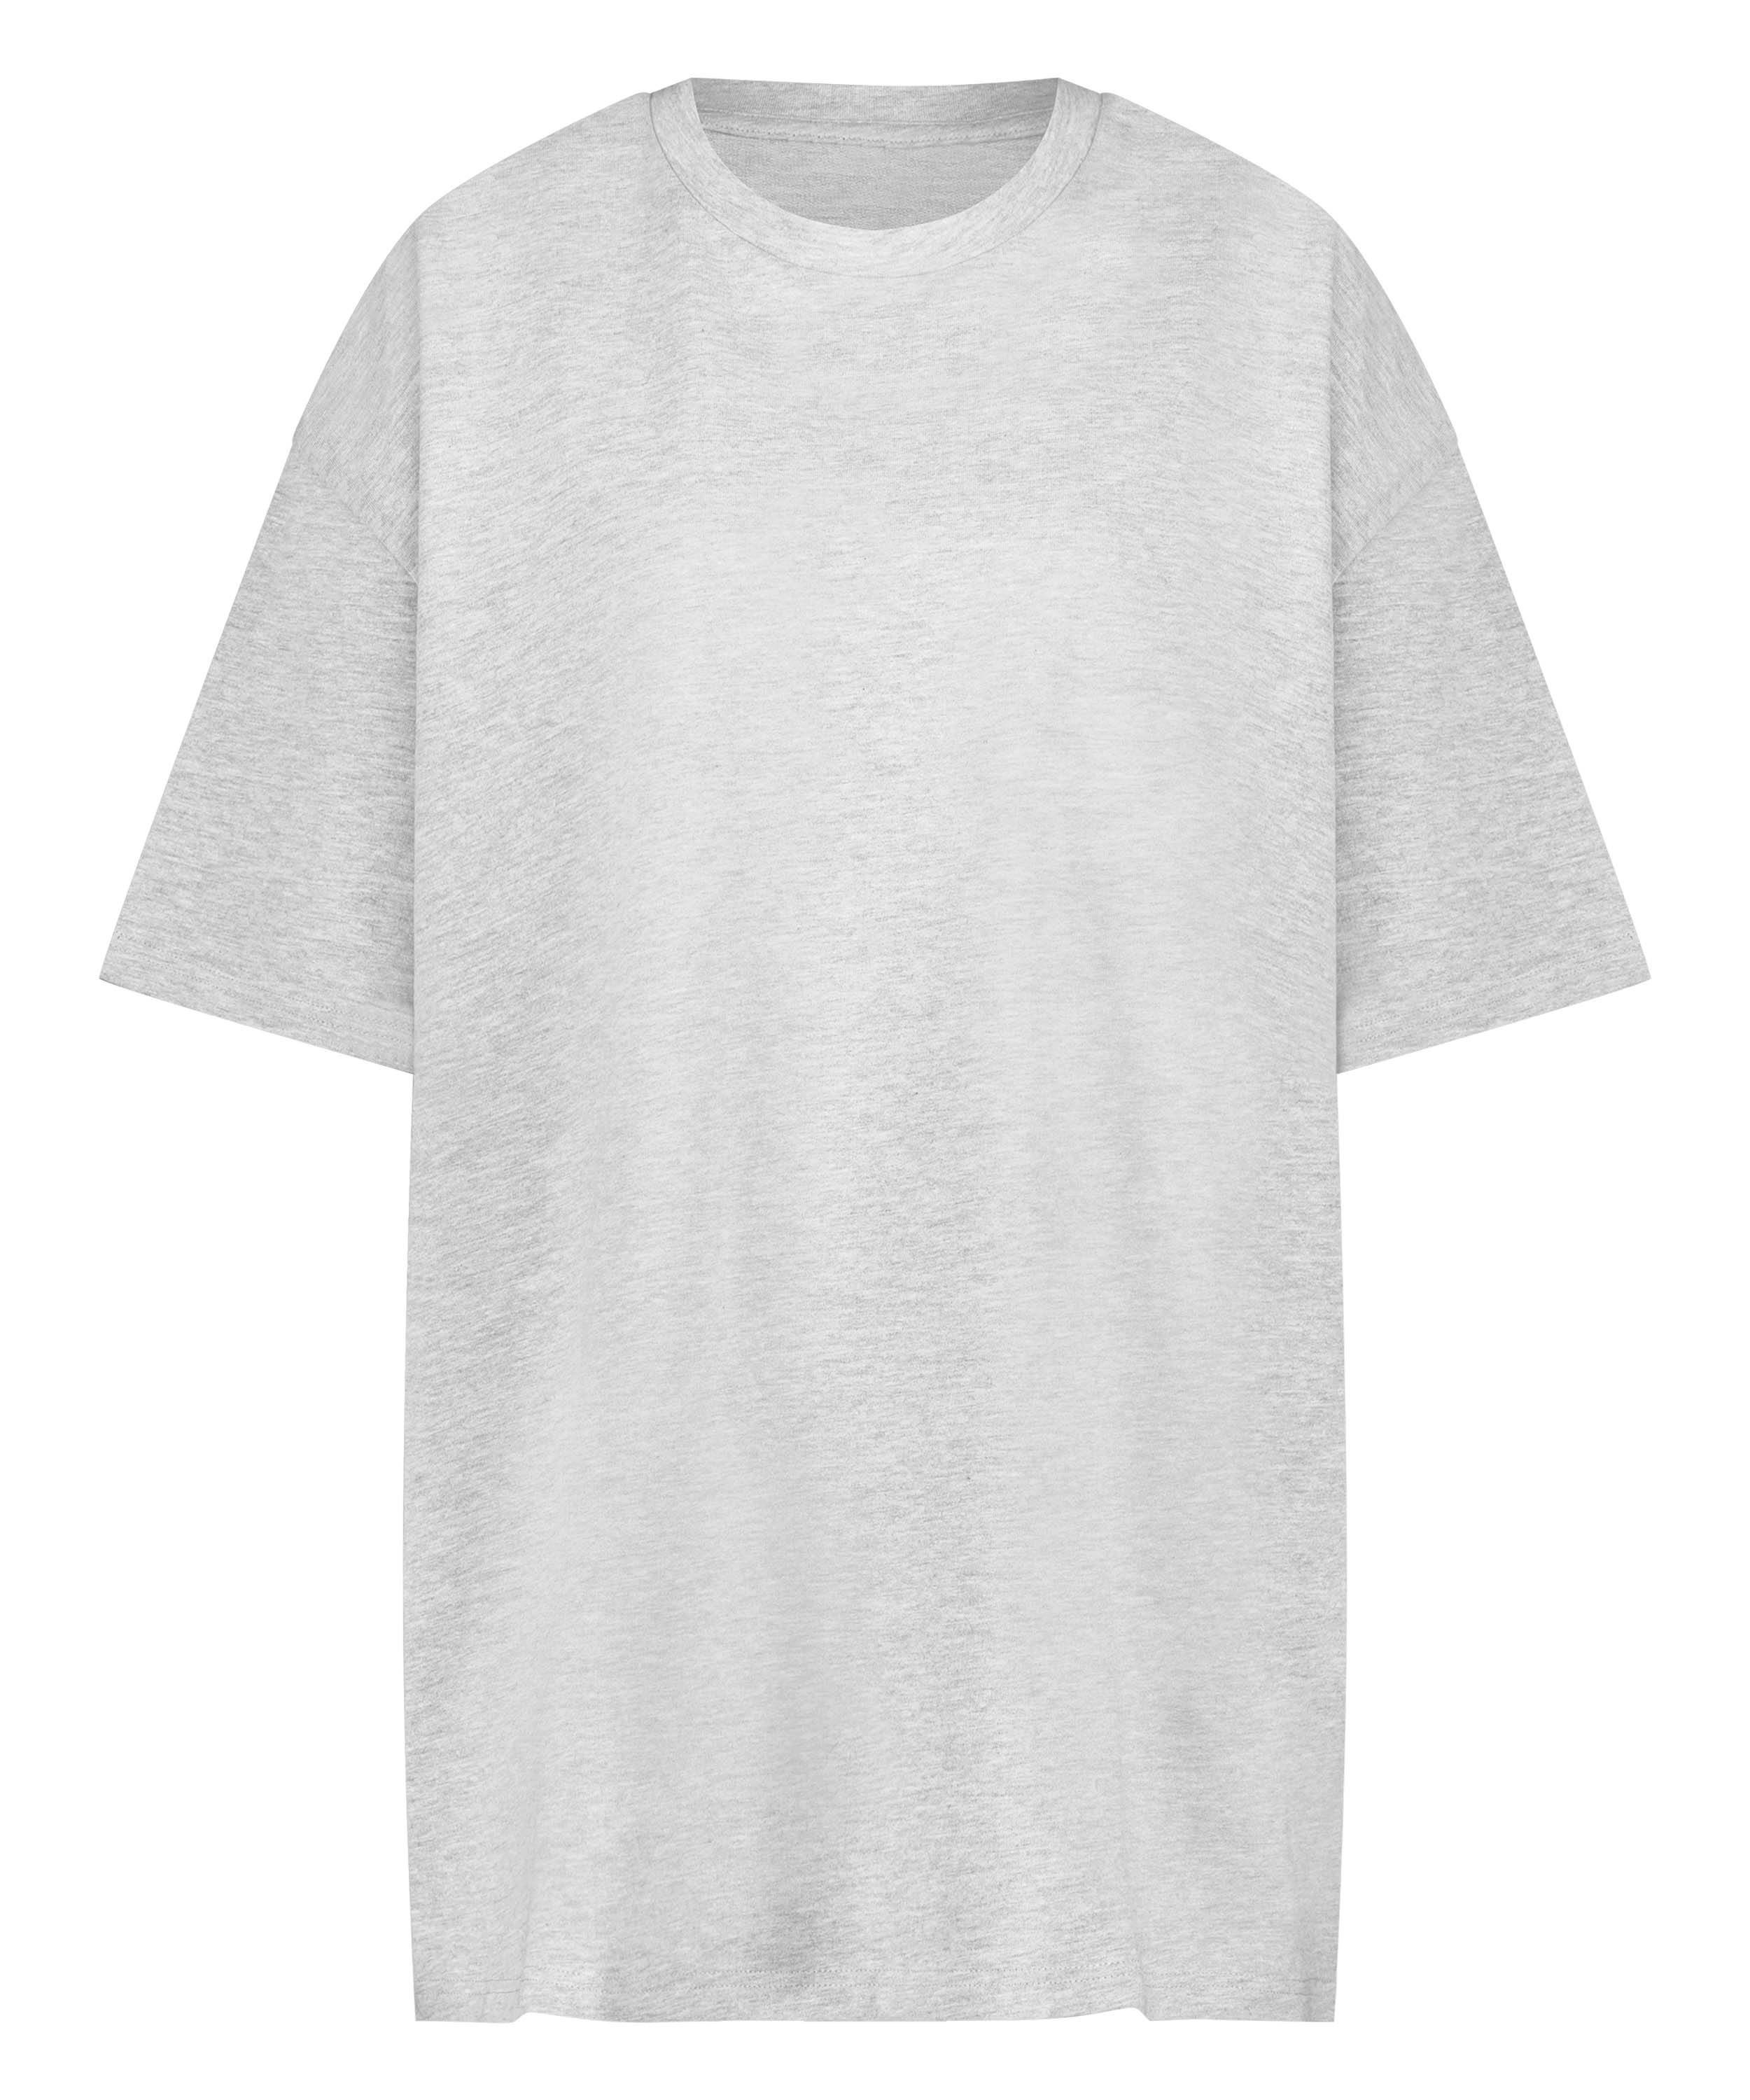 Boyfriend shirt with short sleeves, Grey, main